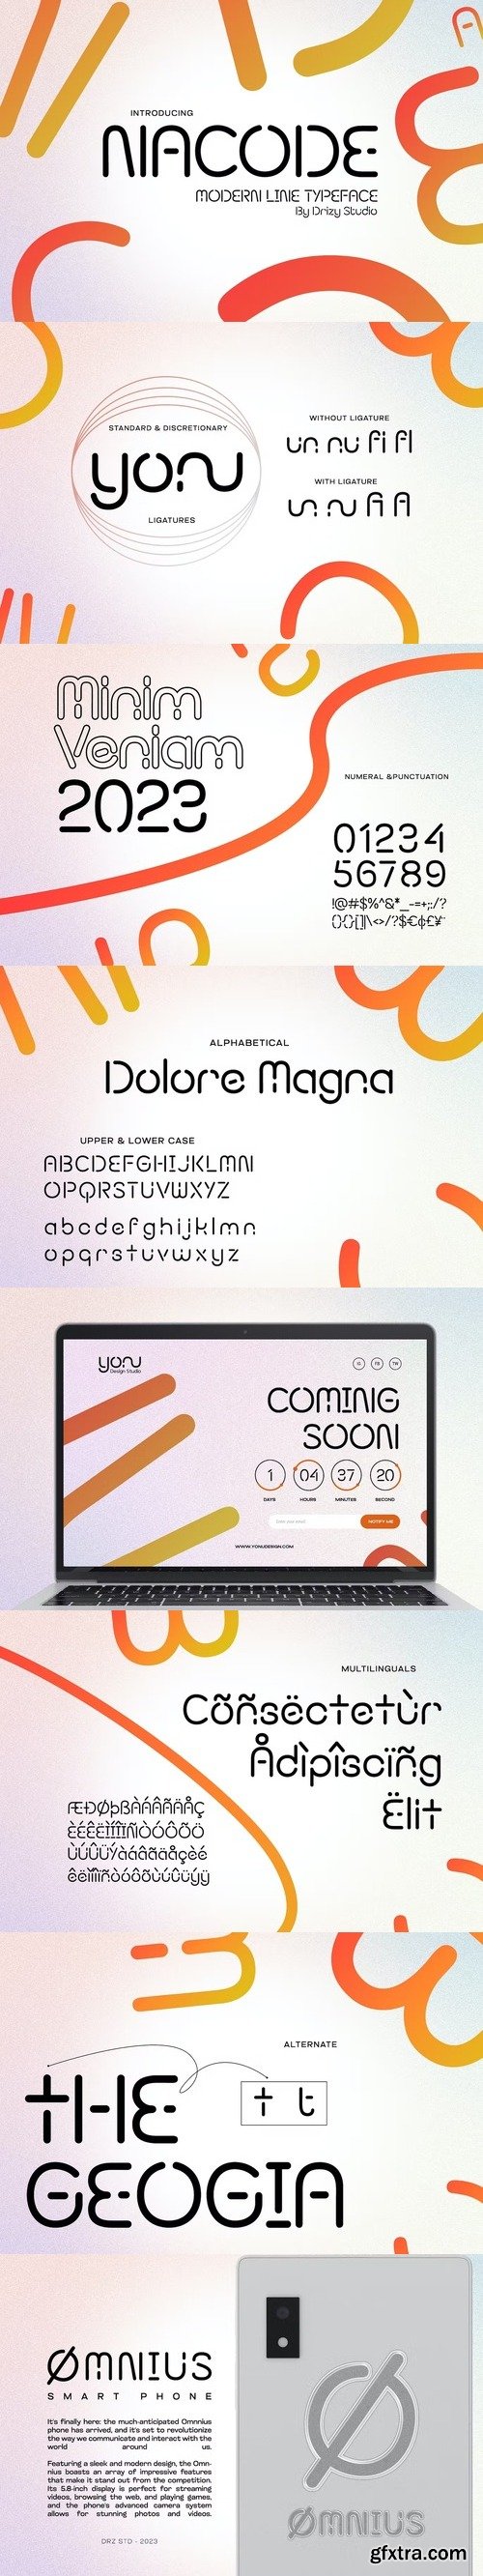 Nacode - Modern Line Futuristic Font